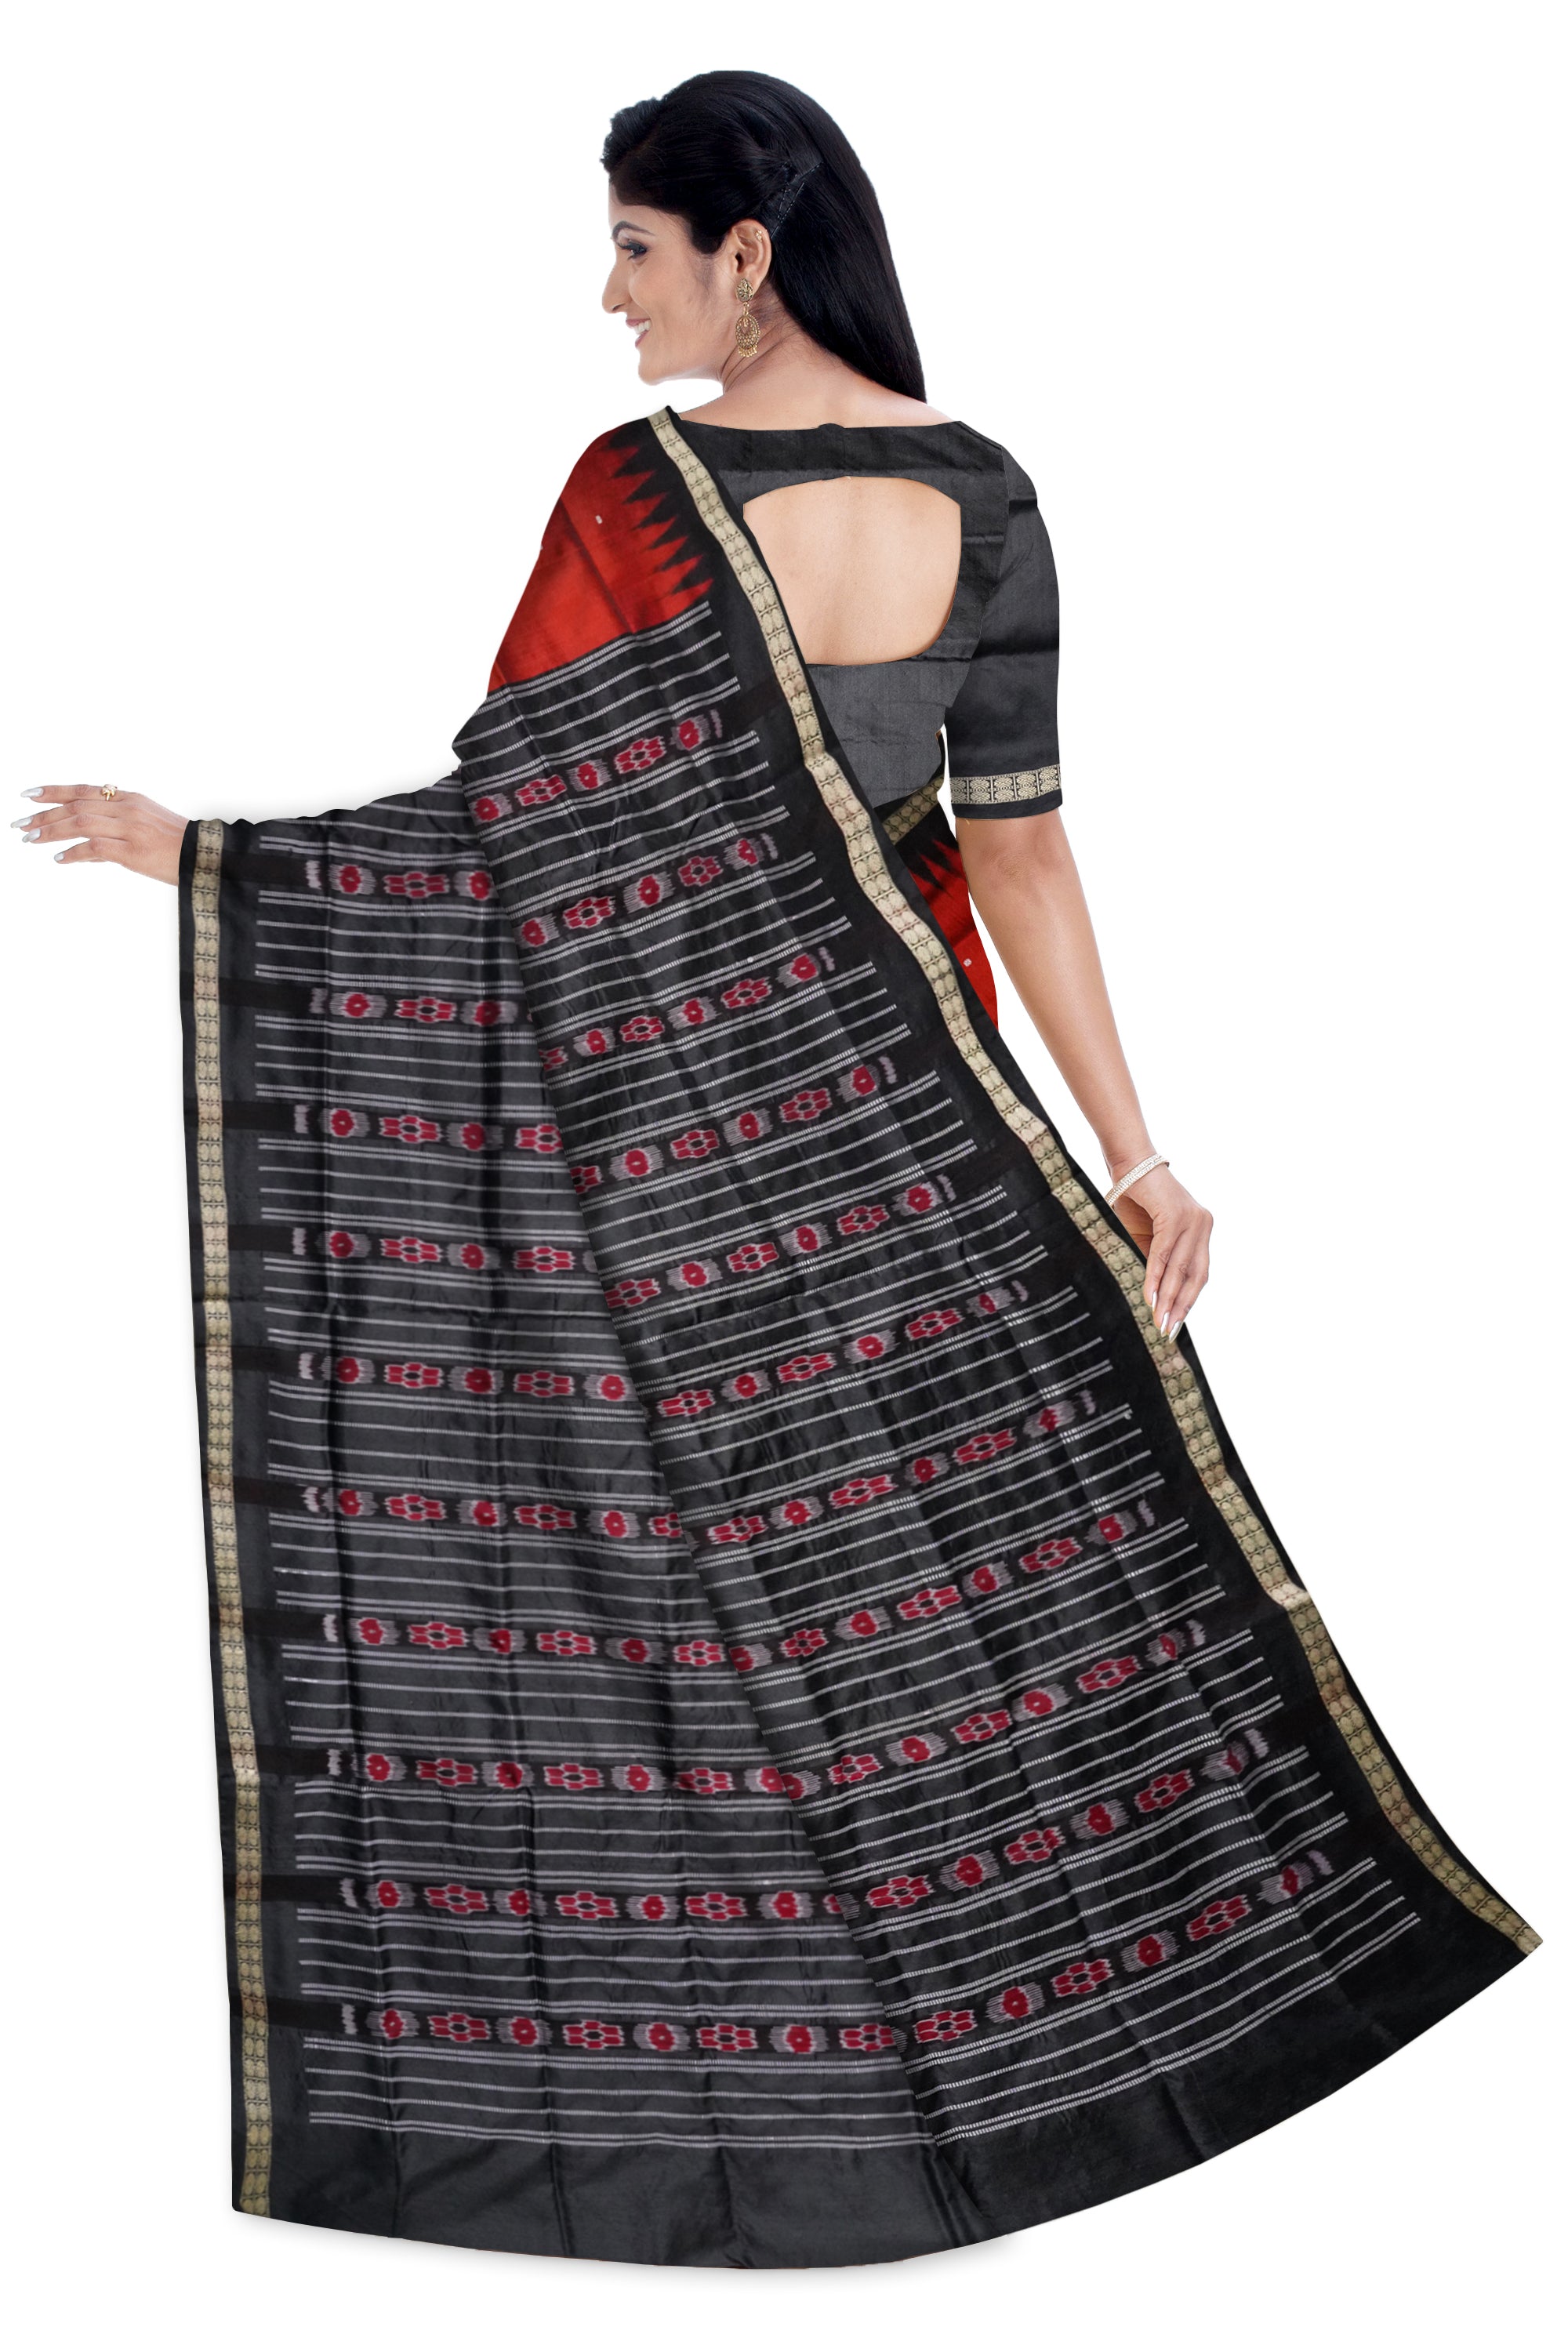 Small booty pattern plain pata saree is light maroon and black color . - Koshali Arts & Crafts Enterprise